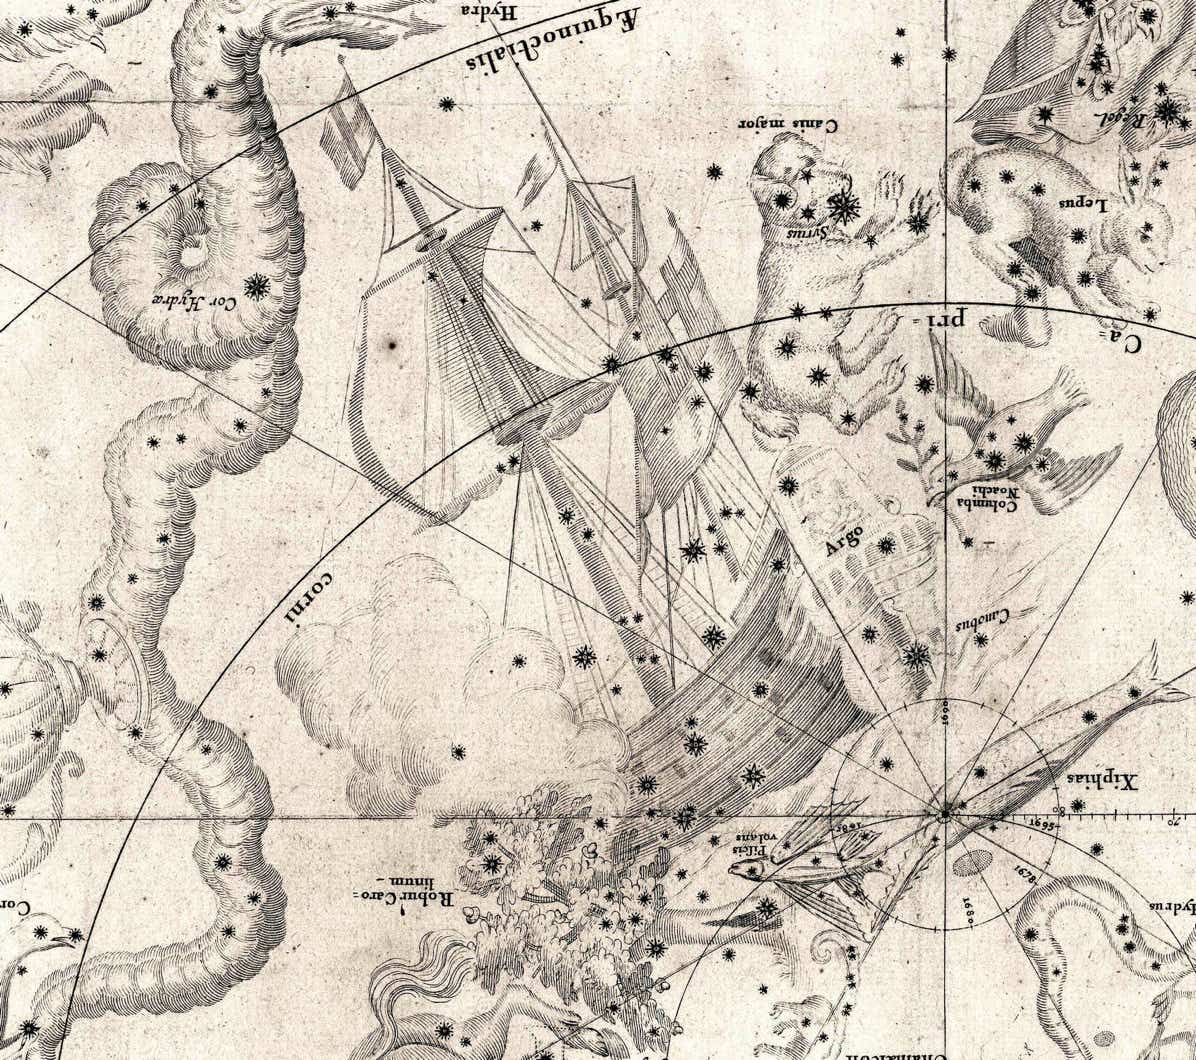 Argo on Edmond Halley's southern star chart